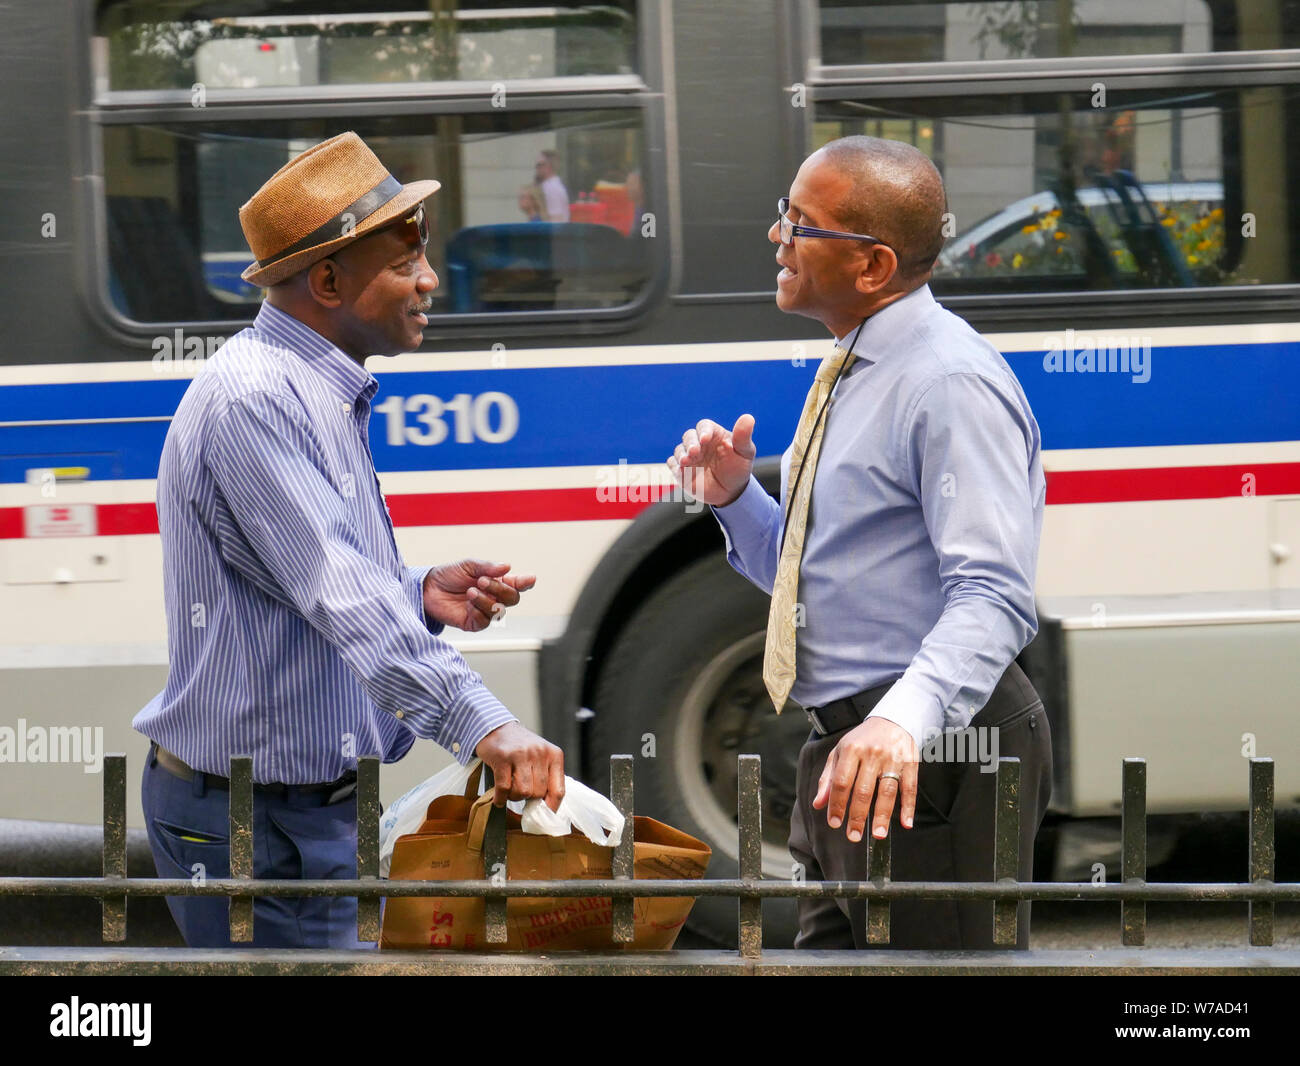 Two men engrossed in conversation. Michigan Avenue, Chicago, Illinois. Stock Photo